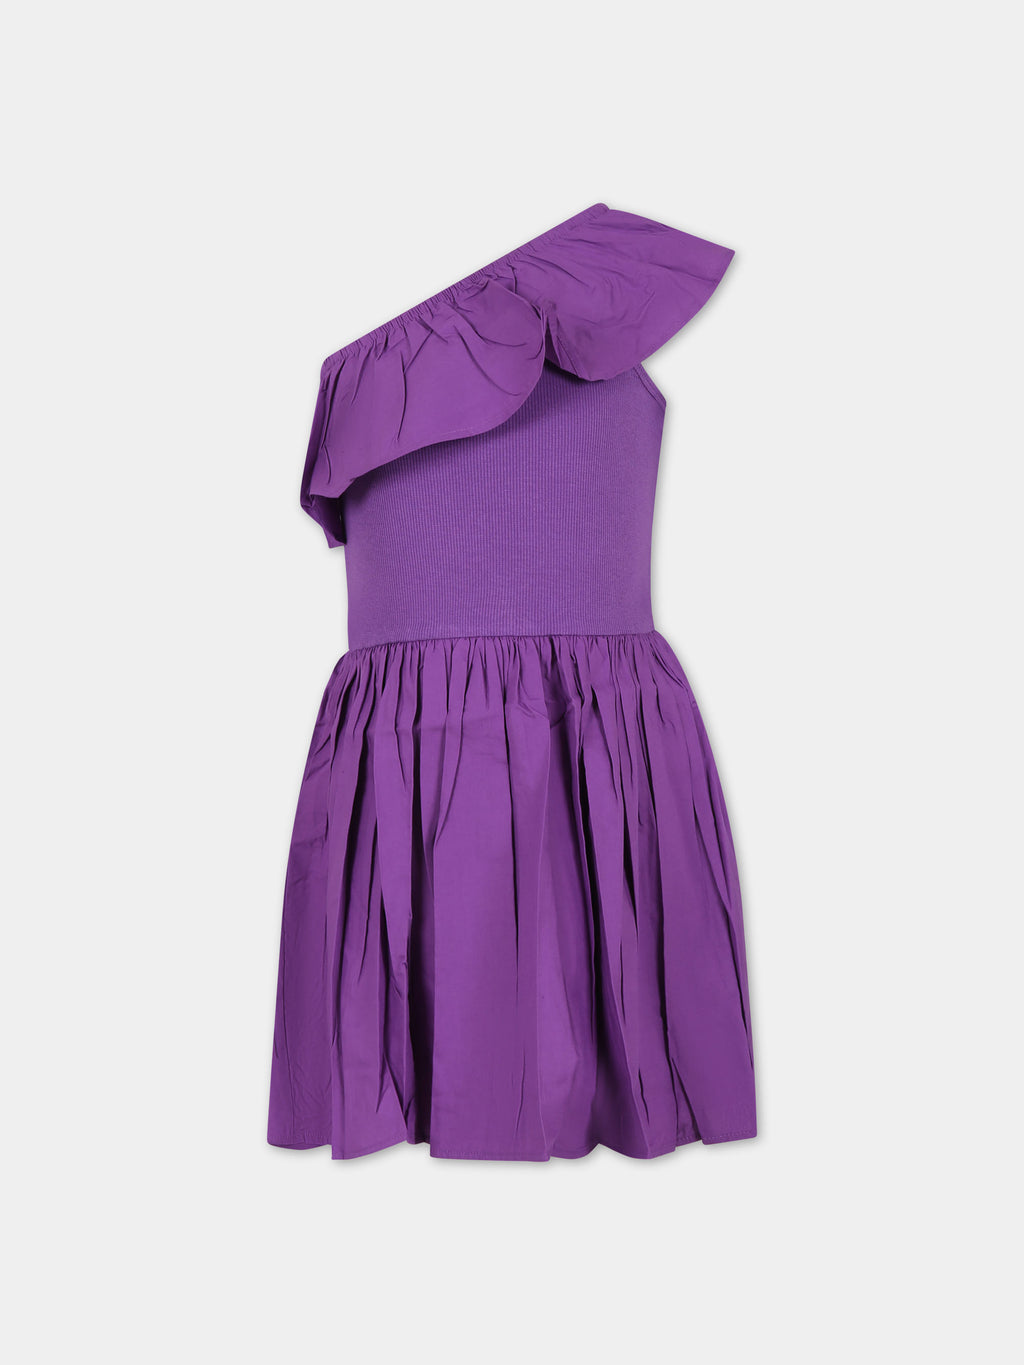 Purple dress for girl